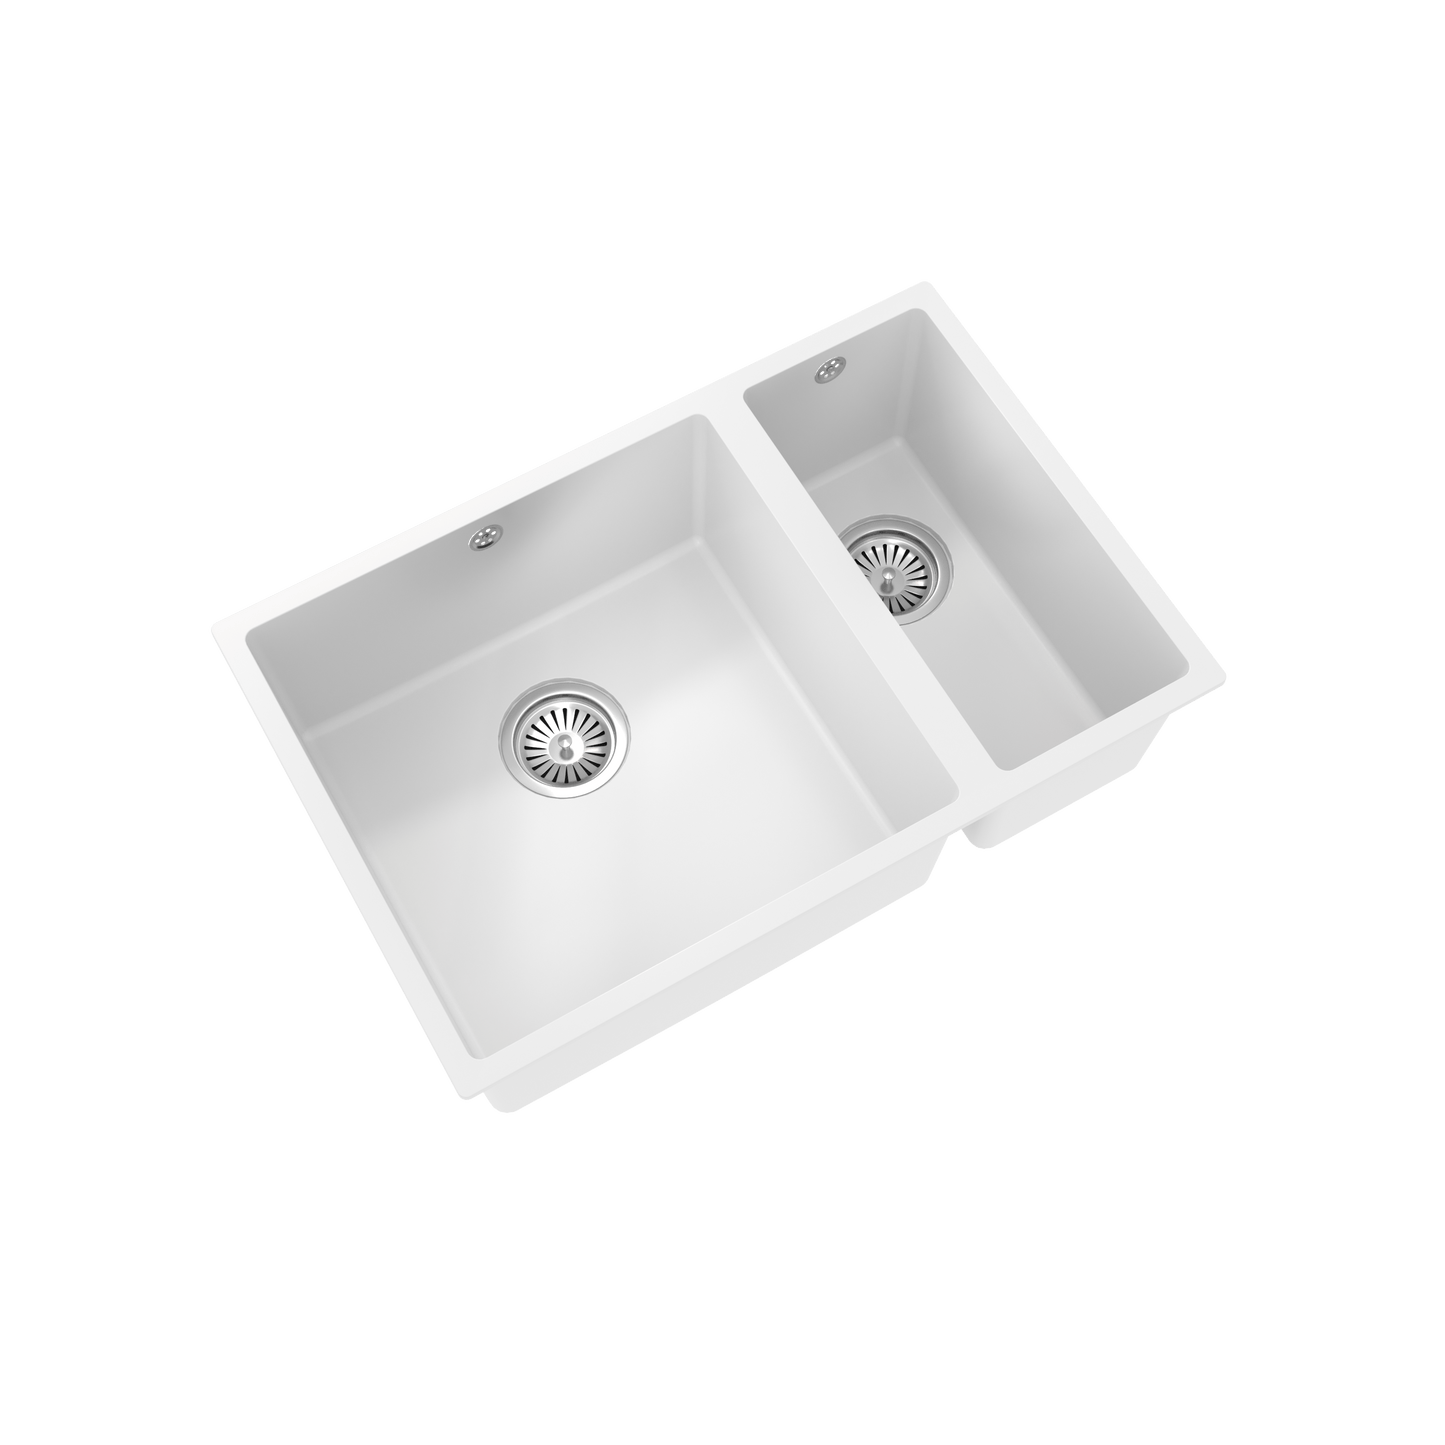 Inserit Comite Inset/Undermount 1.5 Bowl Kitchen Sink - 3 Colours